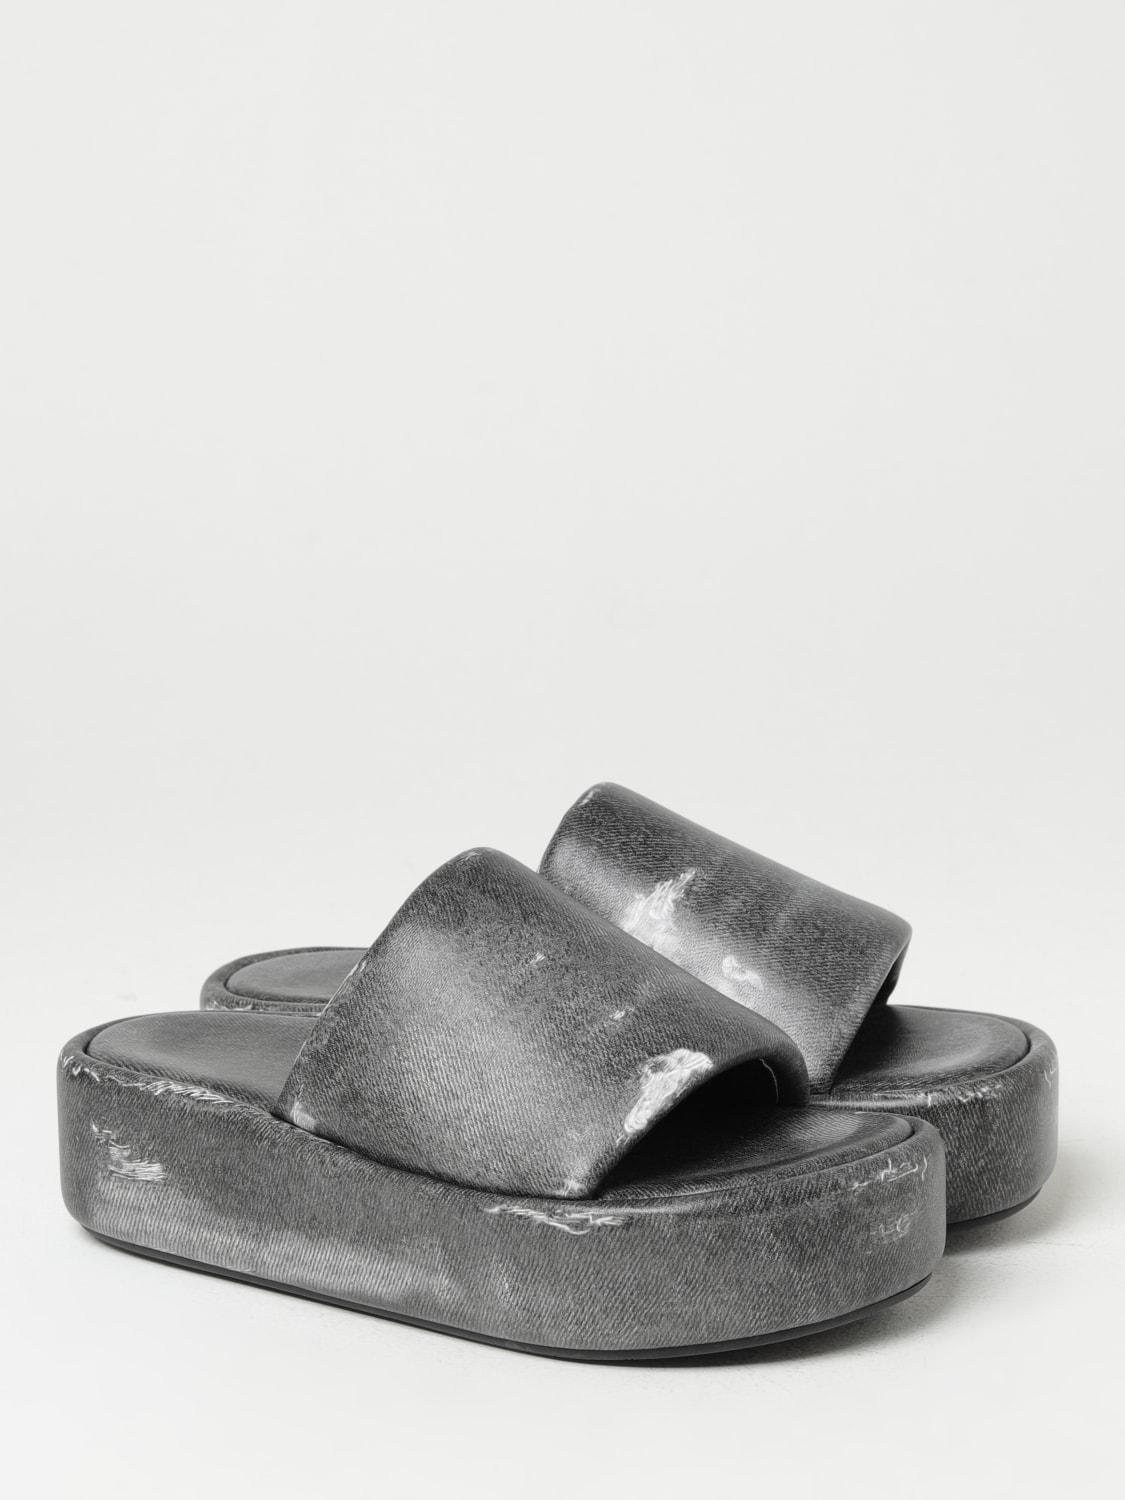 BALENCIAGA: Rise sandals in nappa with denim print - Black | Balenciaga flat sandals online at GIGLIO.COM